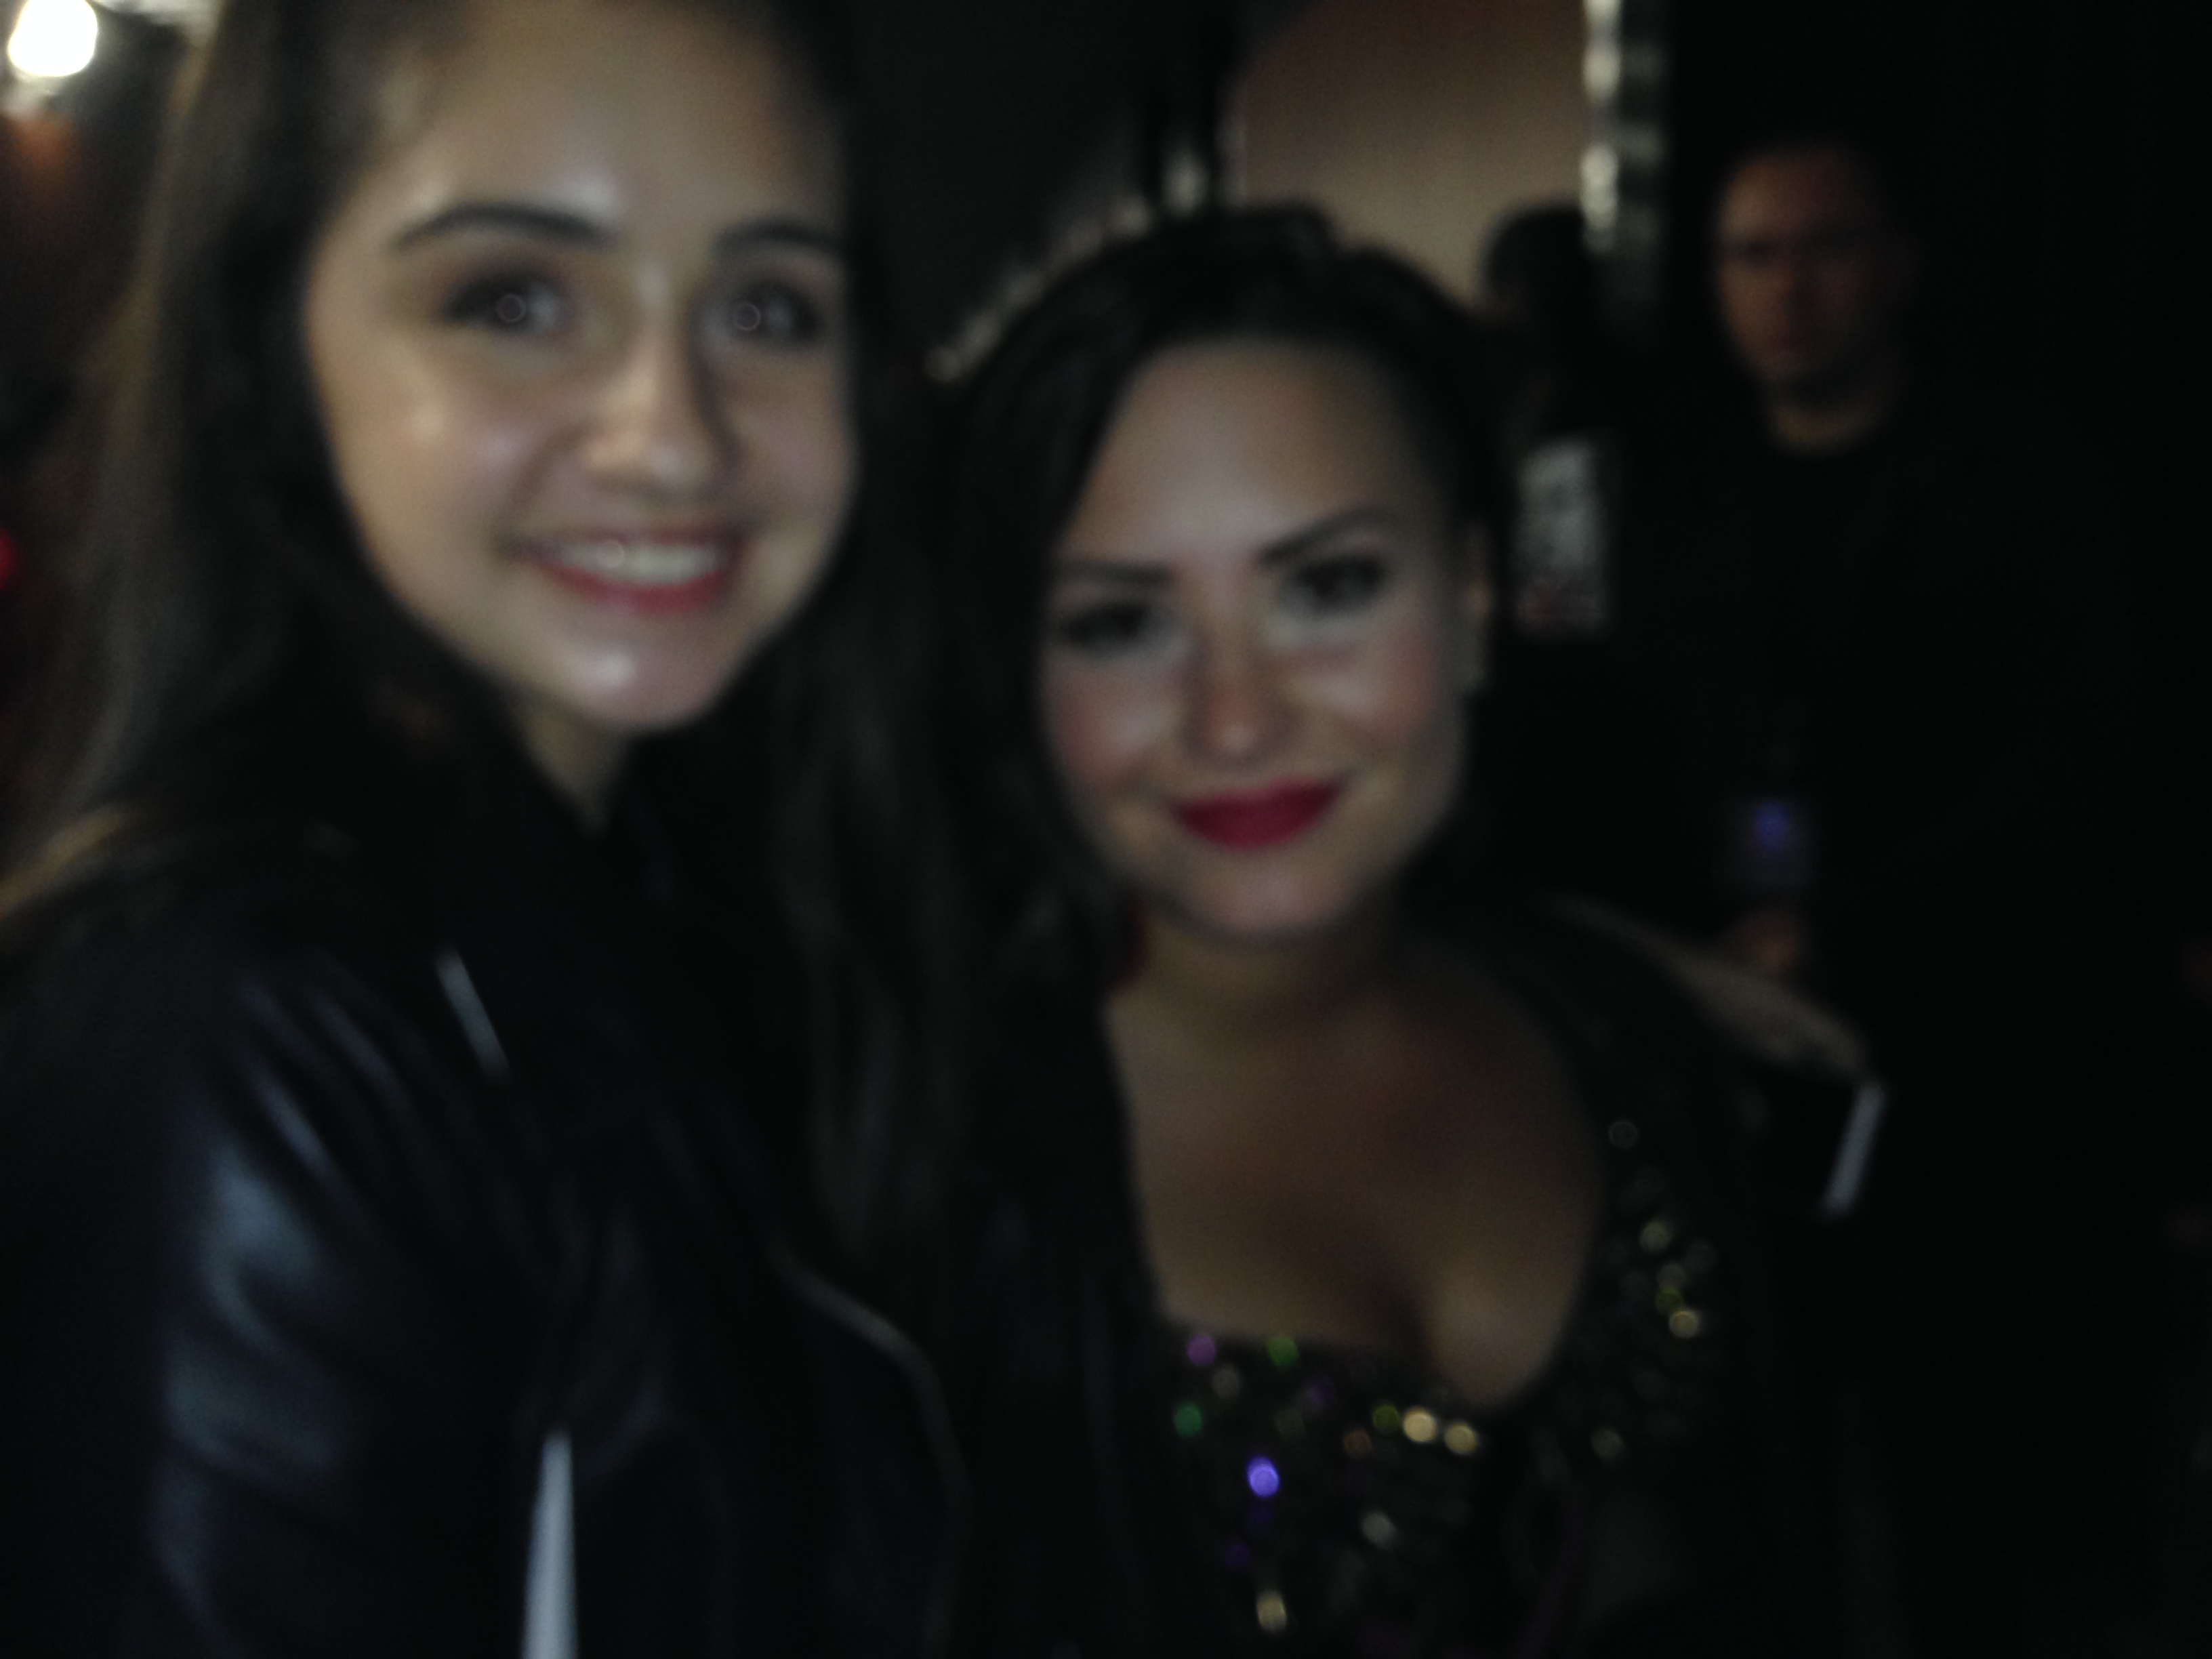 Samantha Elizondo with Demi Lovato backstage at the Staples Center 9/2014.